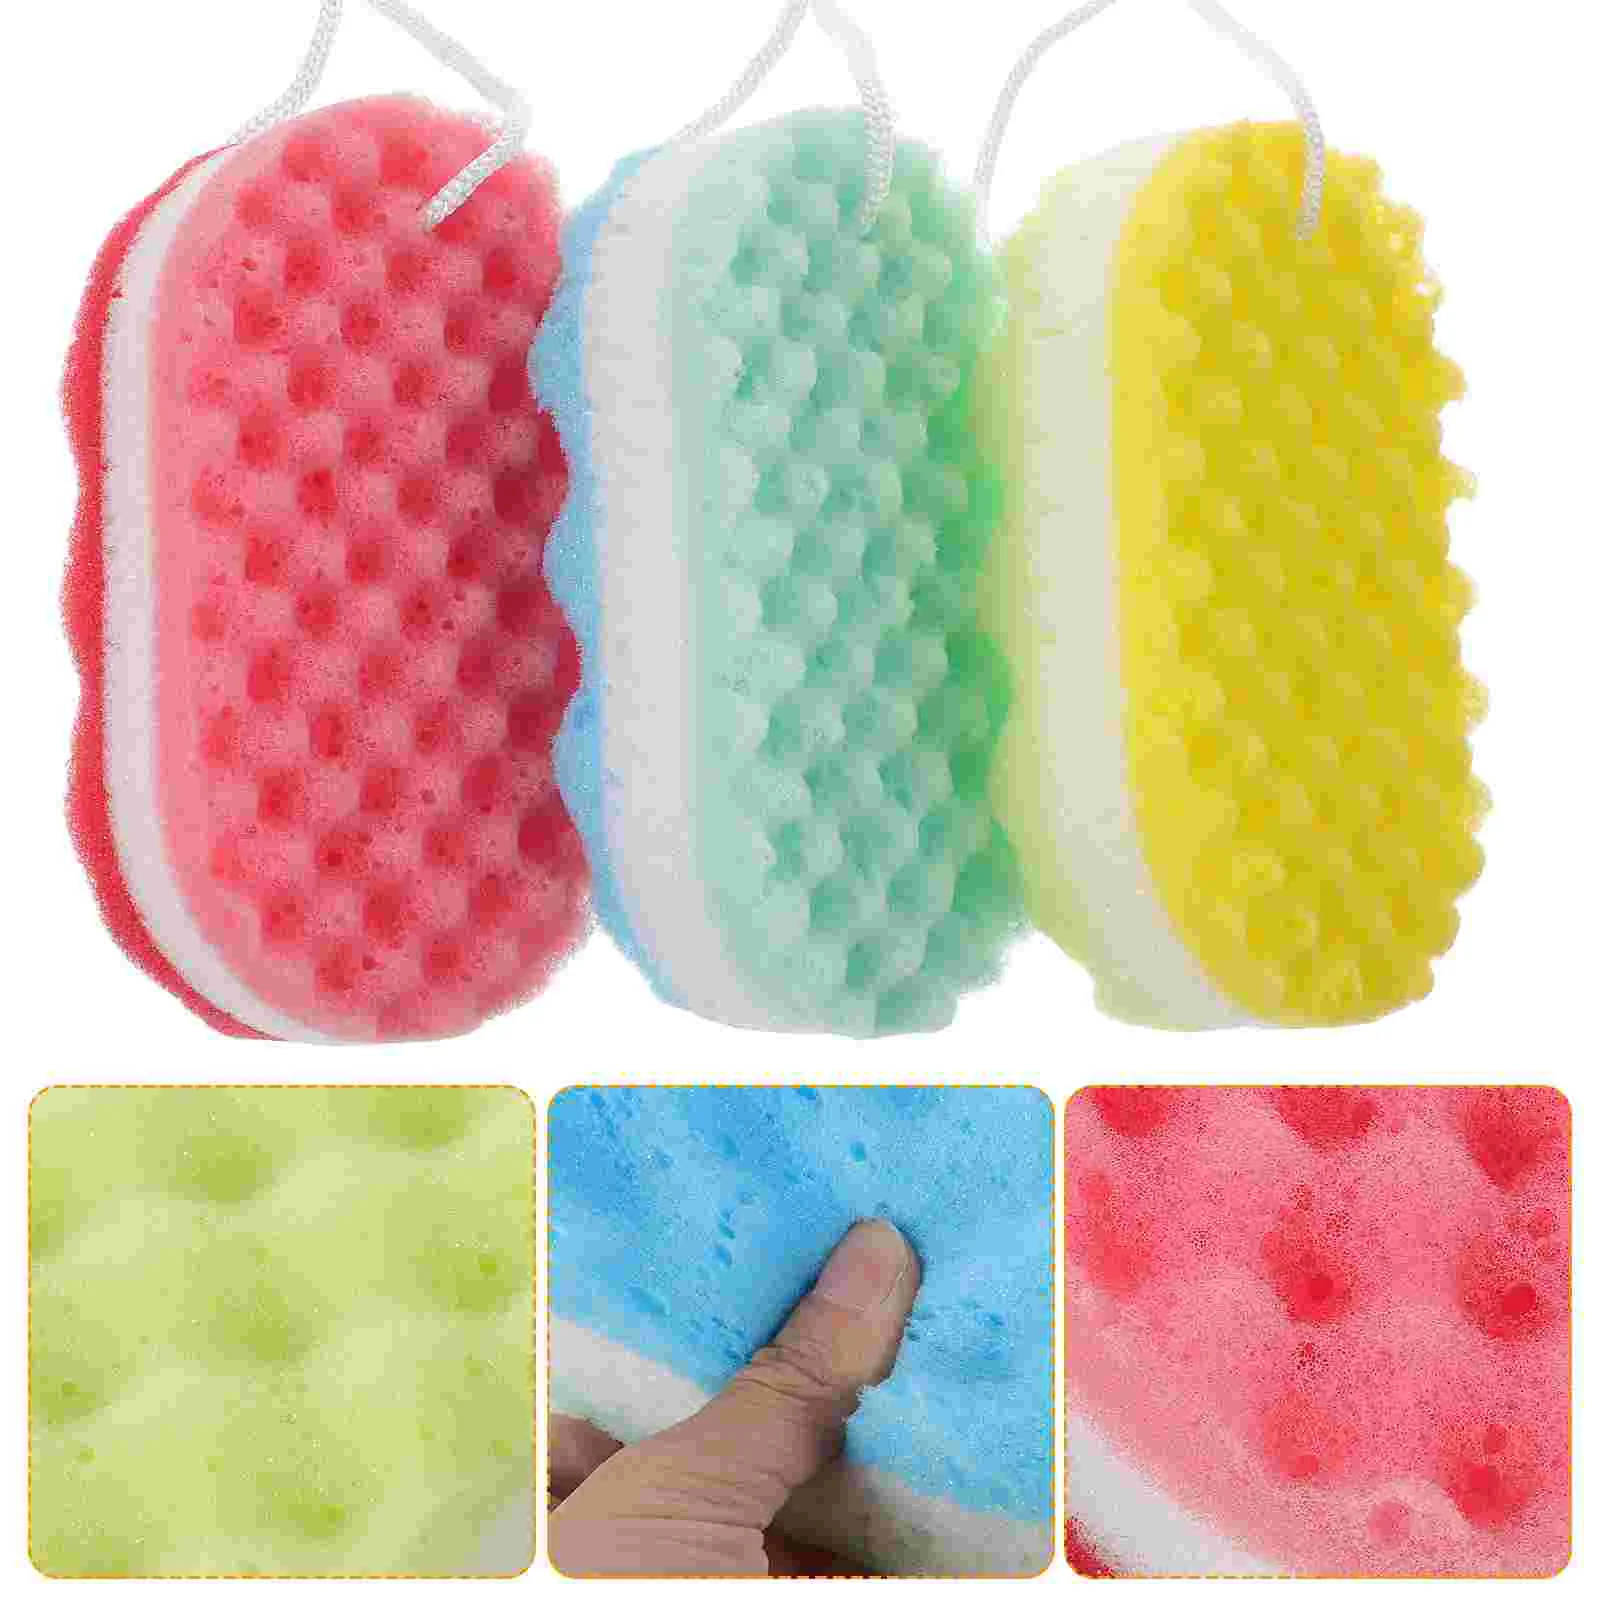 

3Pcs Oval Bathing Sponges Double- sided Bathing Sponge Reusable Body Cleaning Sponges Exfoliating Sponges Bathroom Colourful